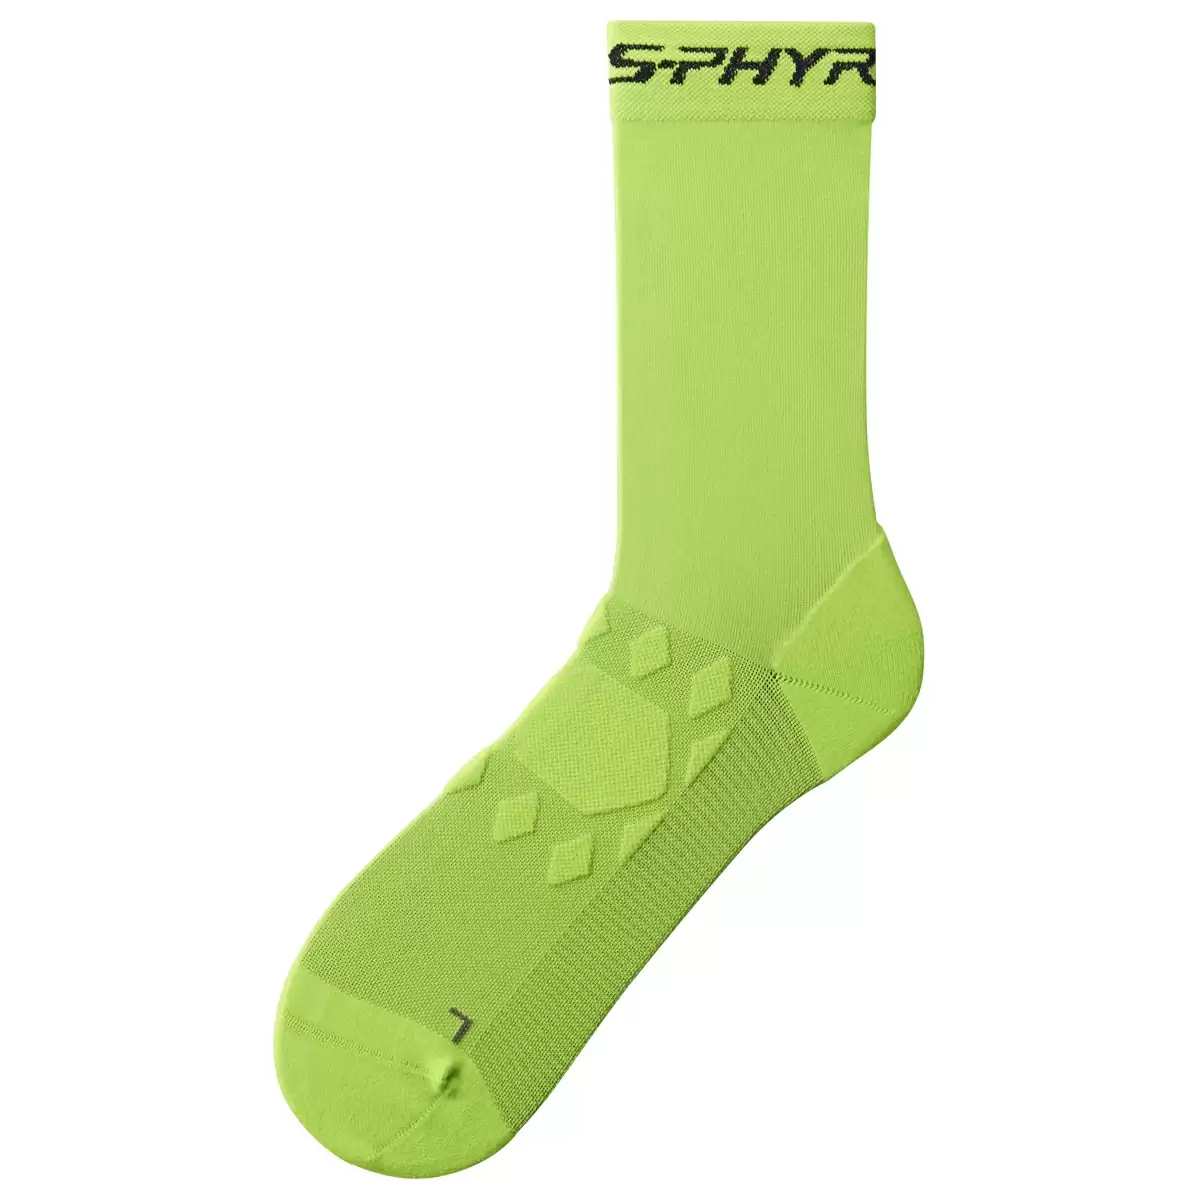 Chaussettes hautes S-Phyre taille XL (46-48) vert - image